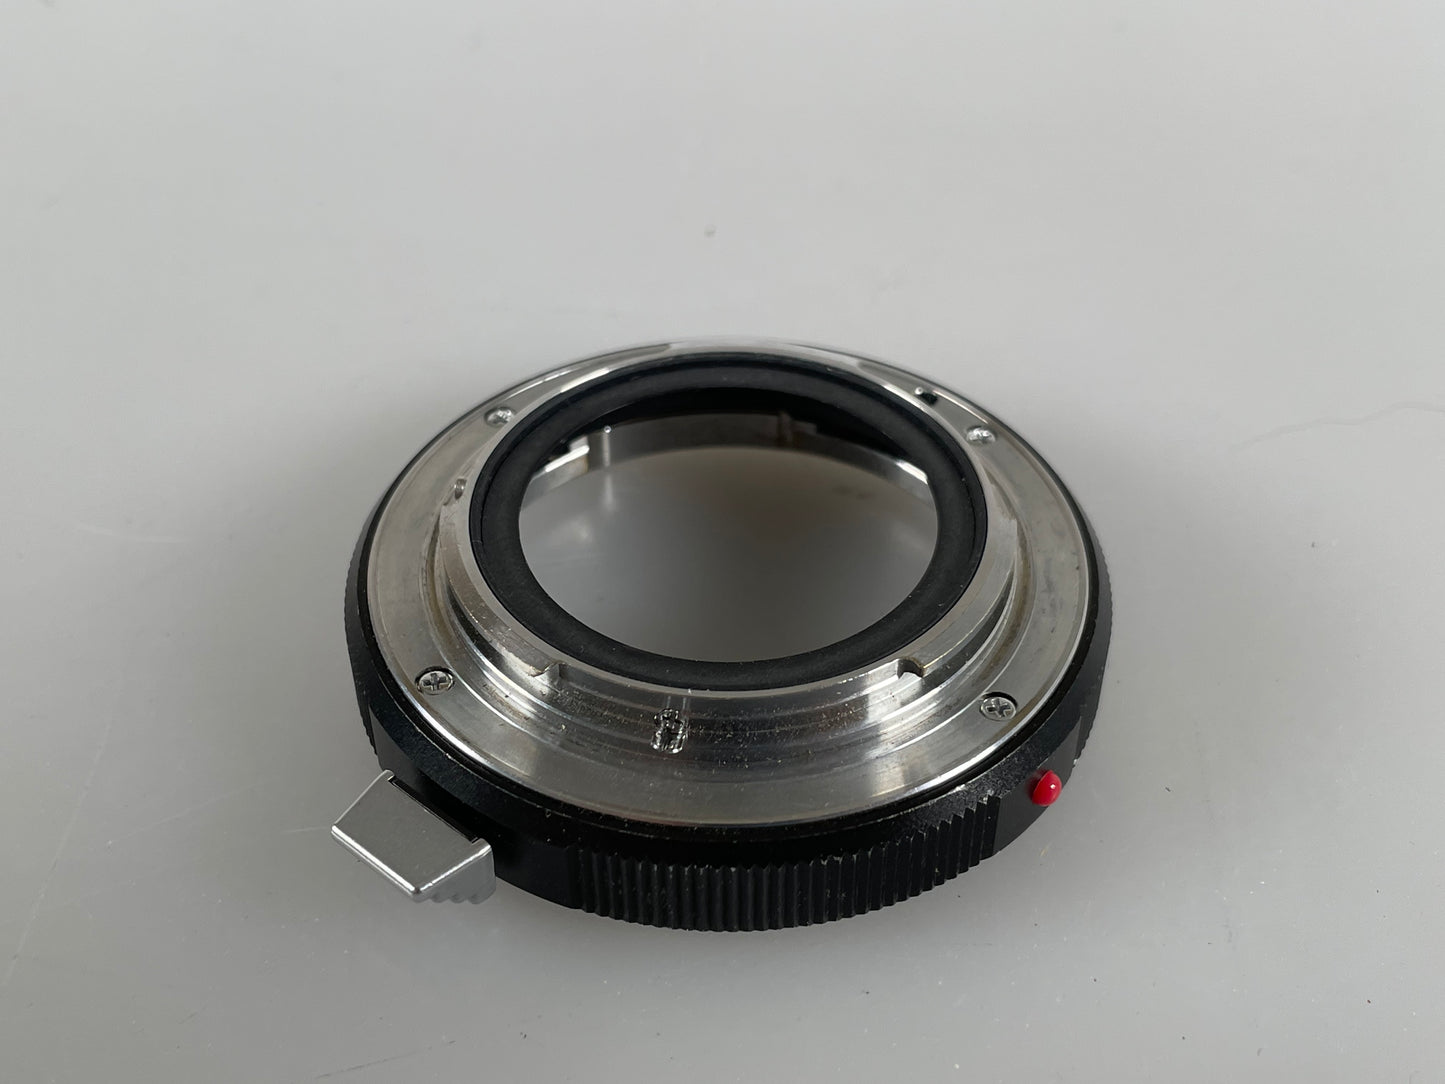 Voigtlander Leica-M to Micro 4/3 Adapter